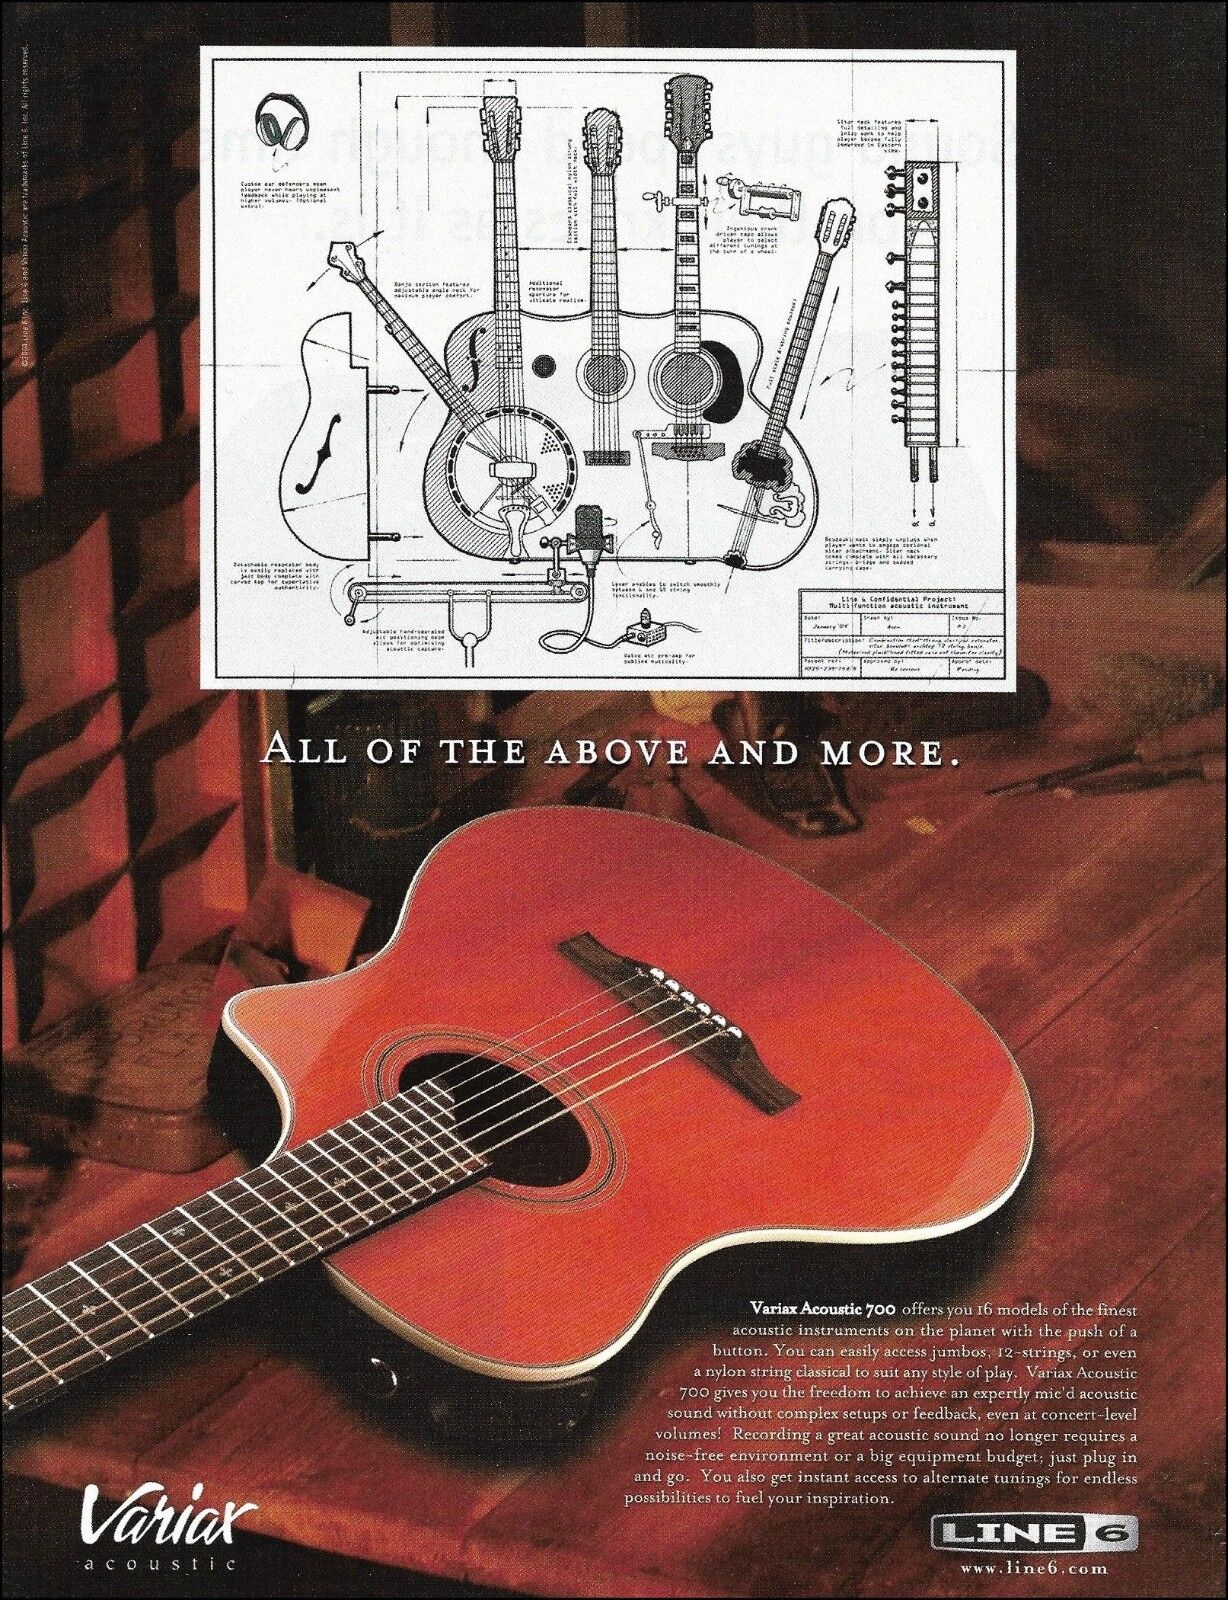 2004 Line 6 Variax 700 acoustic/electric guitar advertisement 8 x 11 ad print